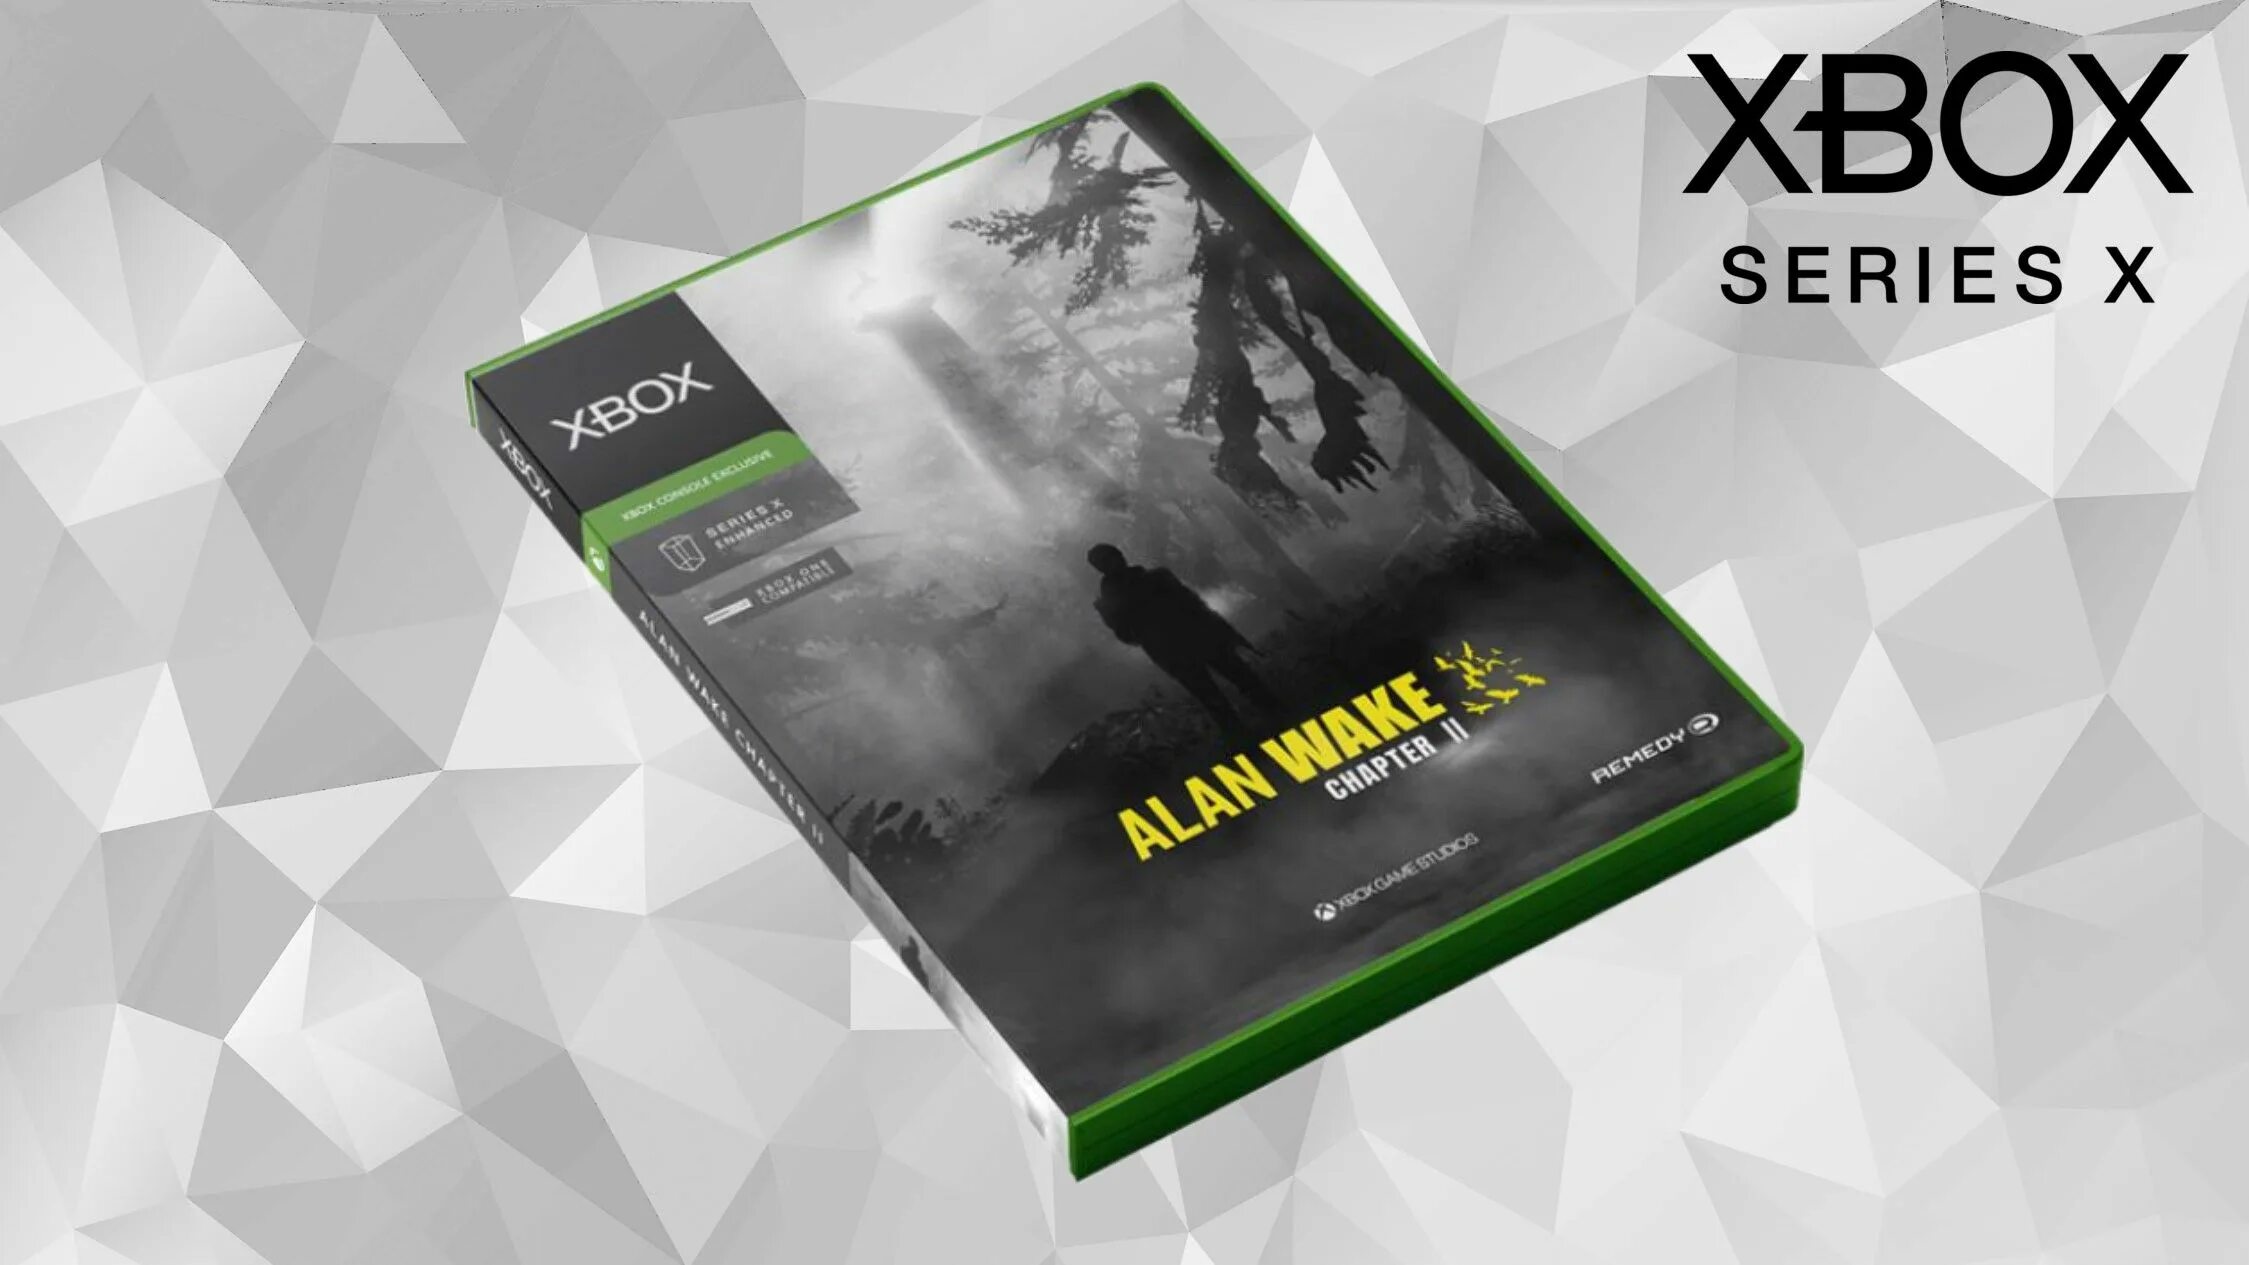 Xbox series коробка. Alan Wake 2 диск Xbox s x. Xbox Series x коробки 10. Xbox Series x русская версия диск. Xbox Series x Concept.